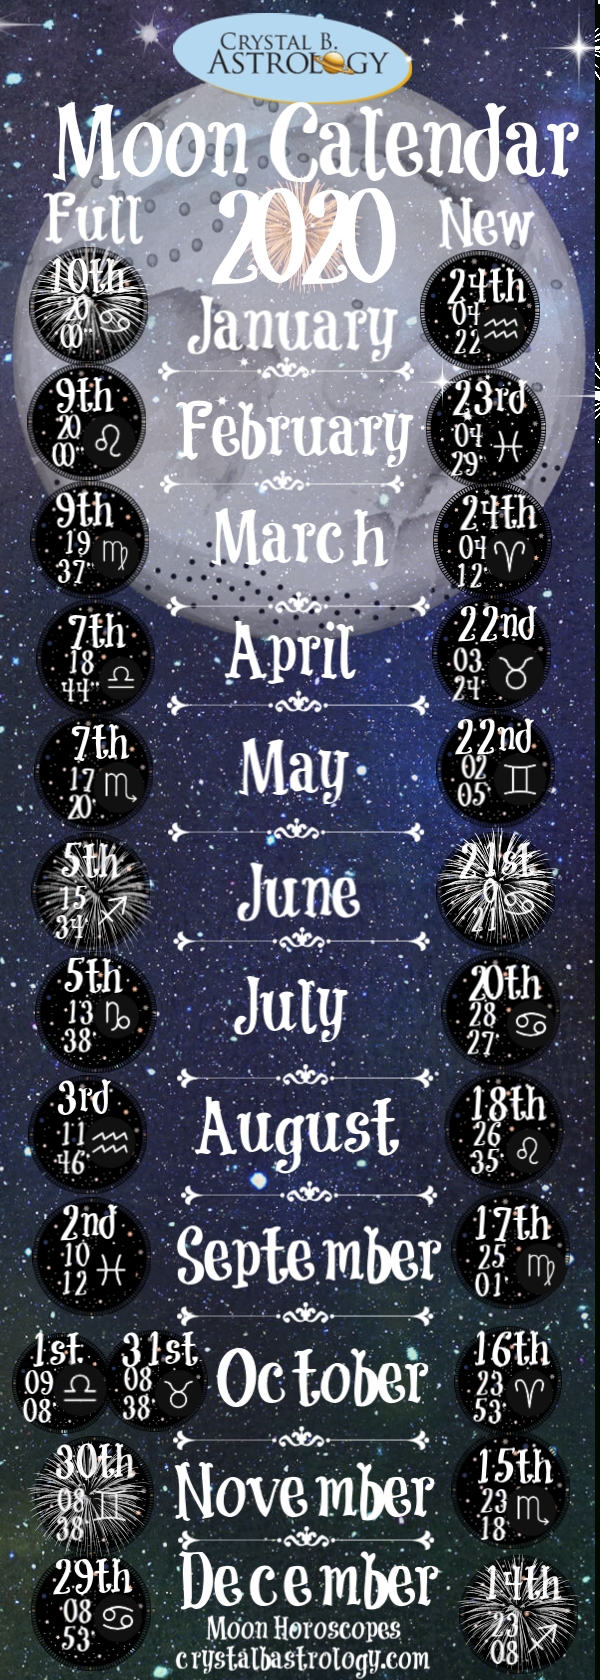 Moon Calendar 2020 #Wiccanspells Moon Astrology - Identify Moon Calendar And Zodiac Signs